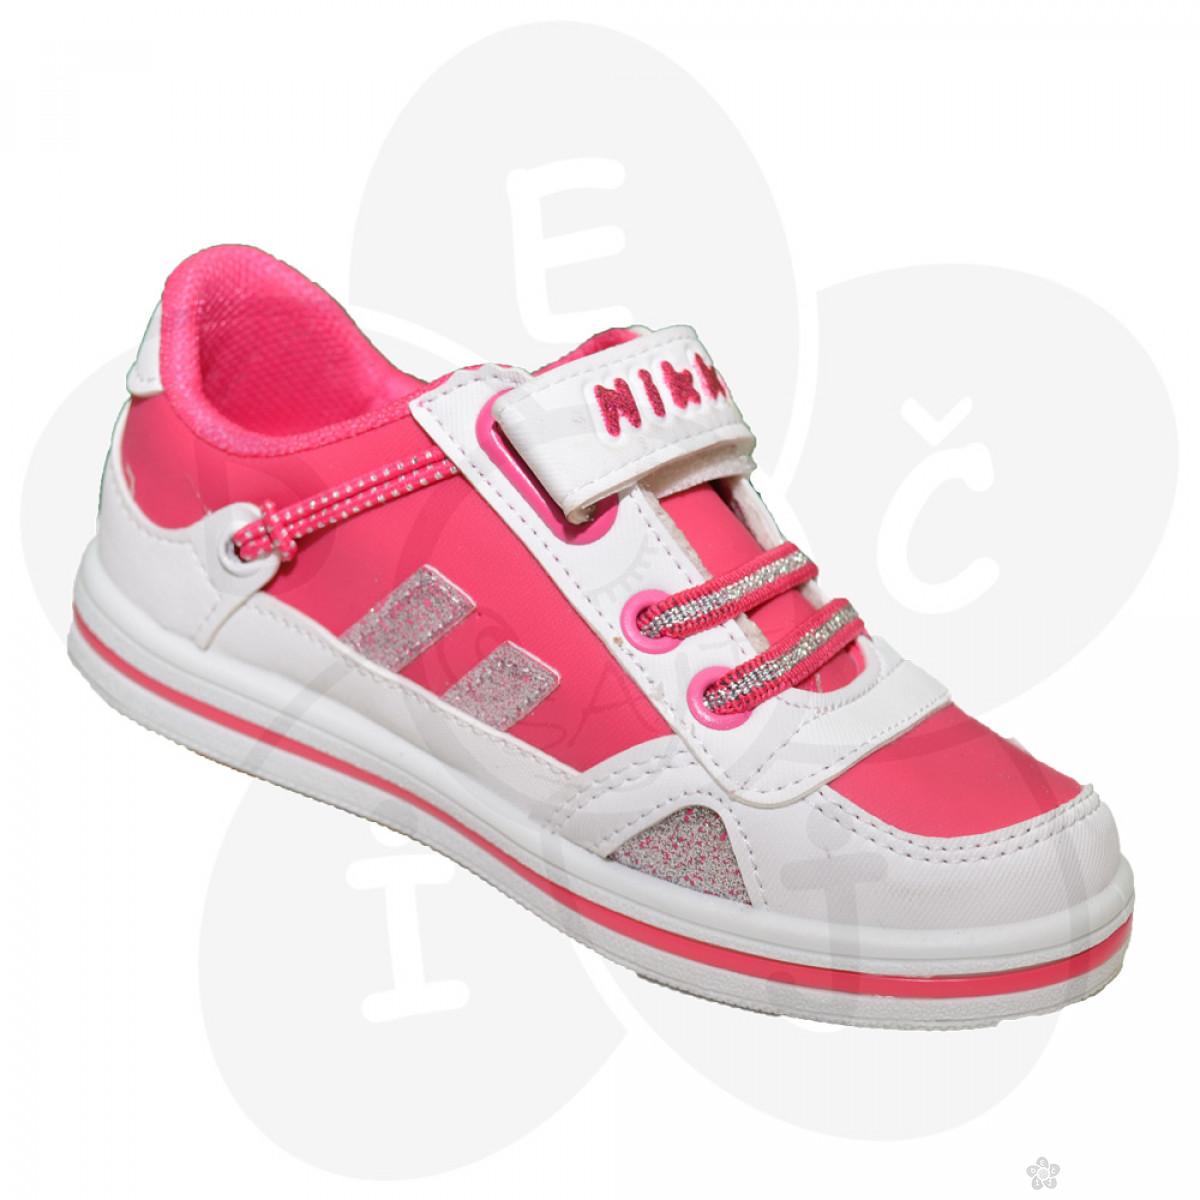 Dečija obuća - belo-roze patike na čičak traku | Dečji sajt